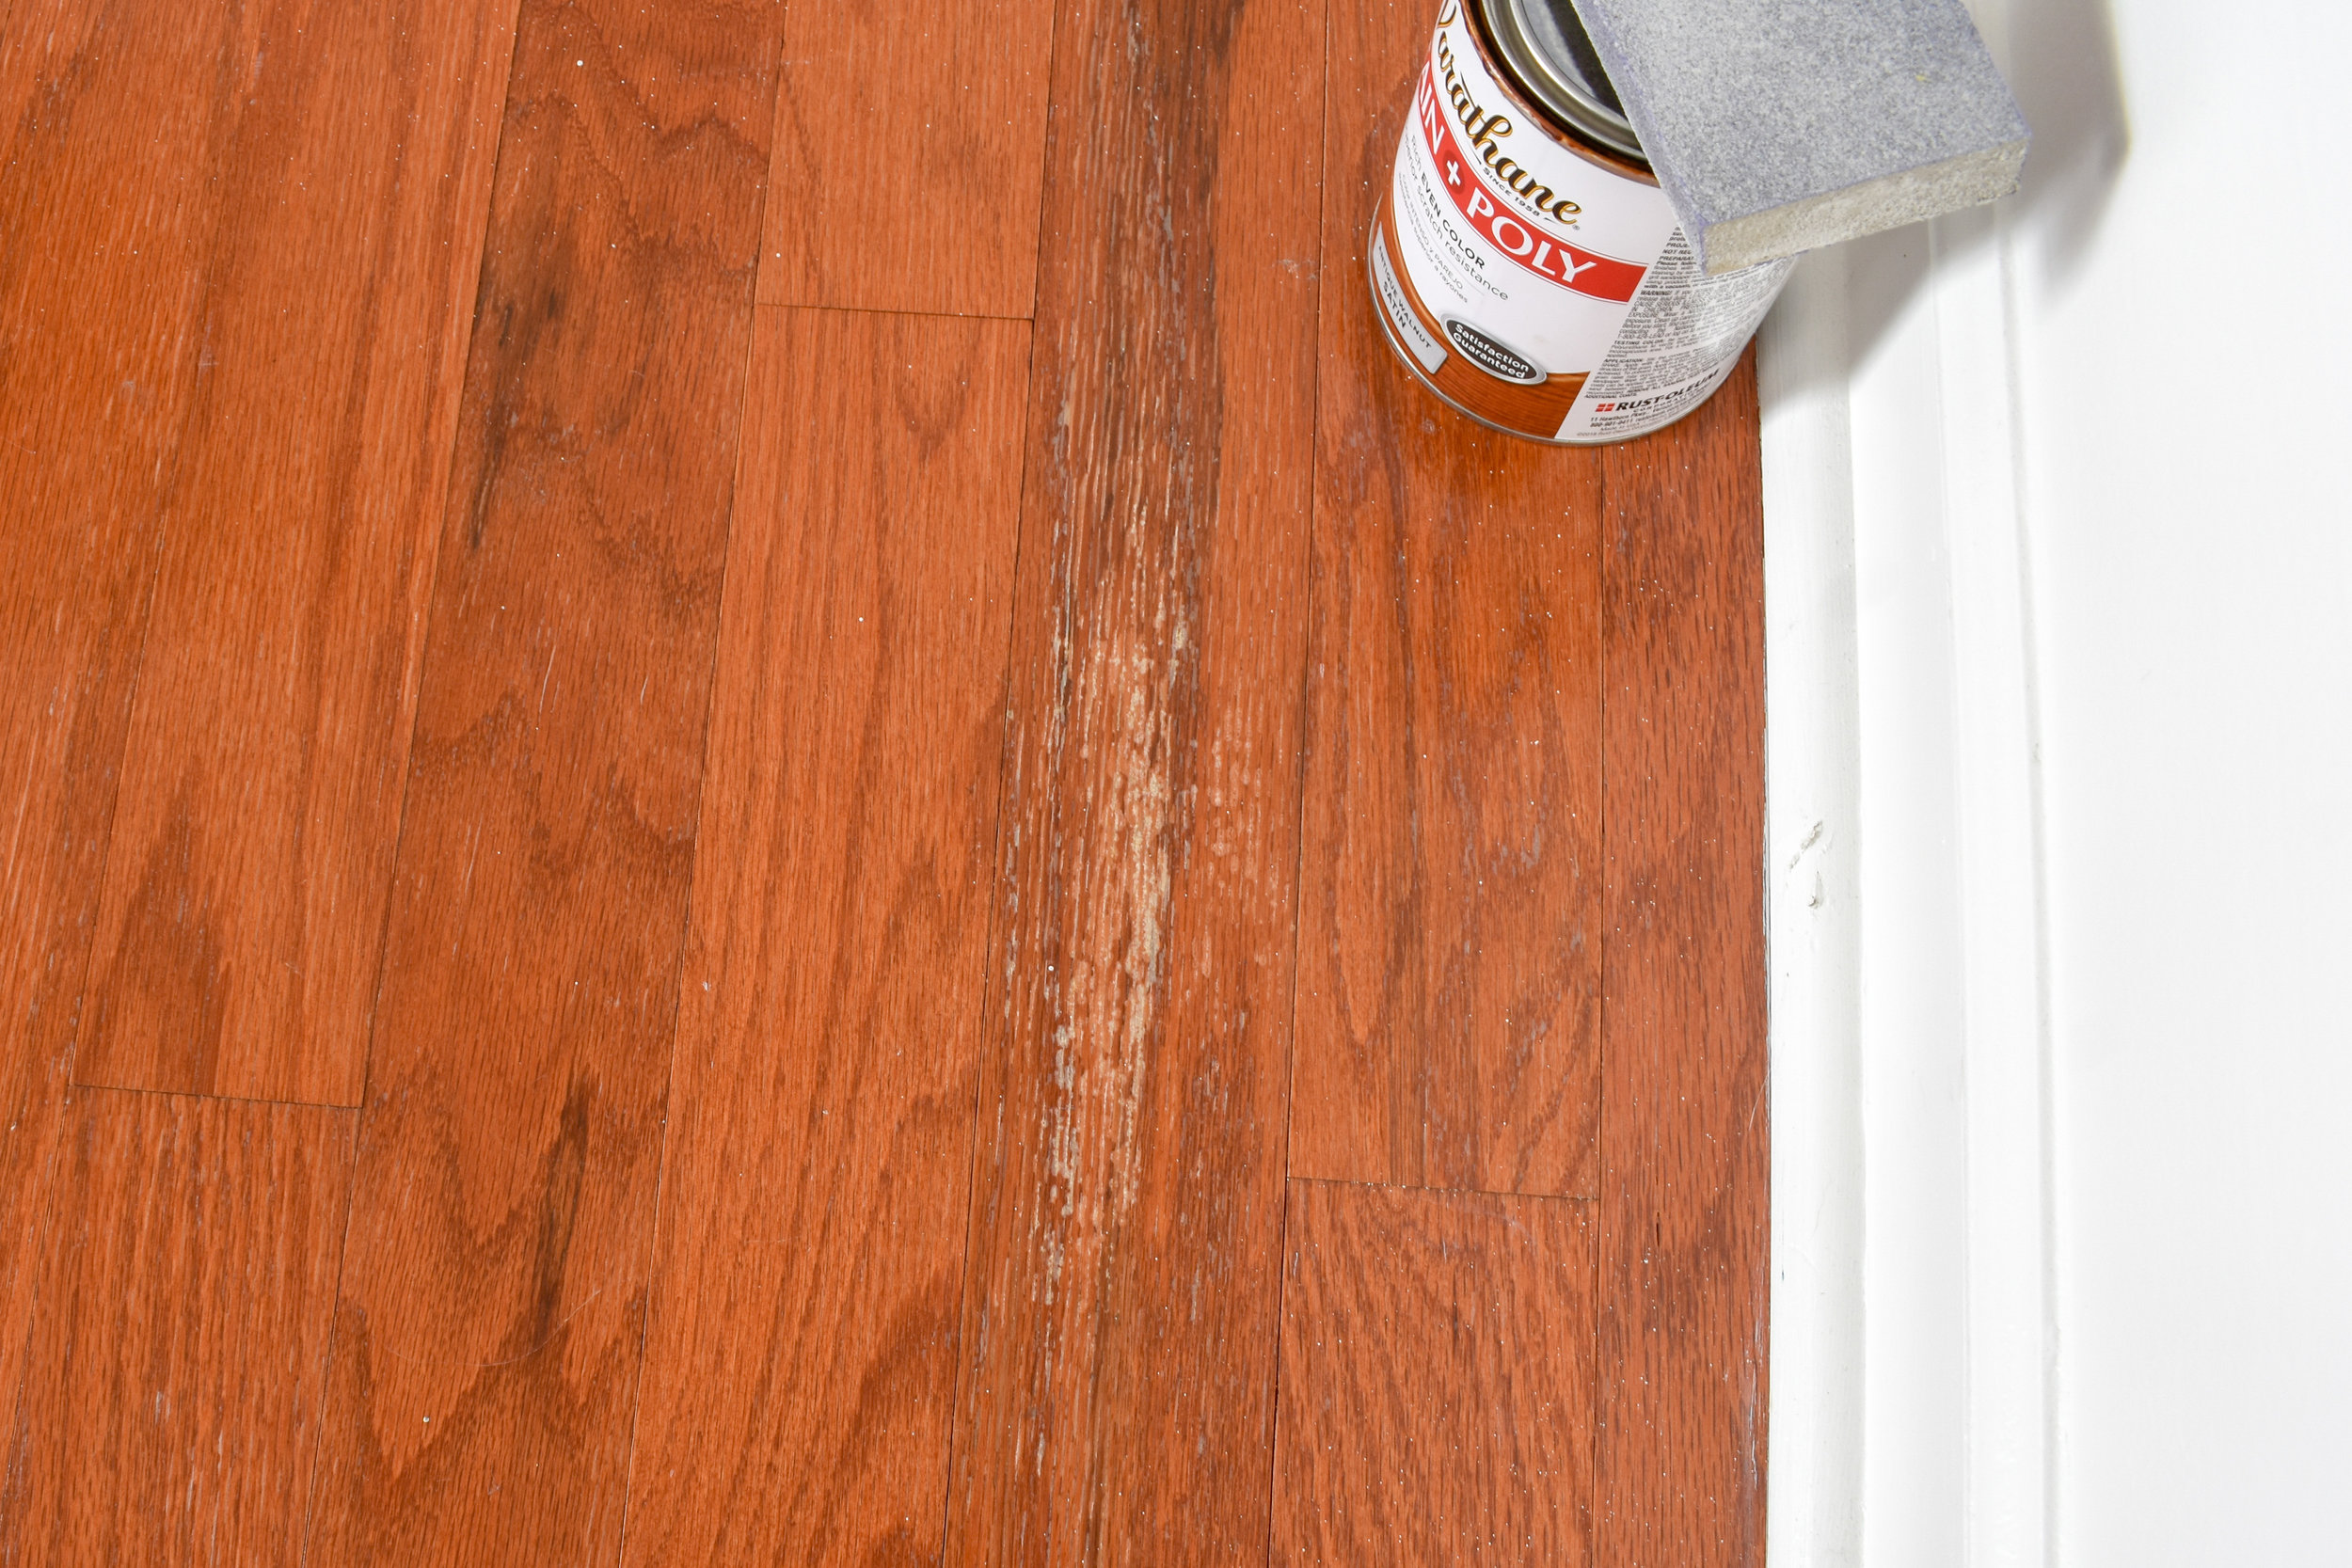 How To Make Old Hardwood Floors Shine, How To Clean Pre Engineered Hardwood Floors